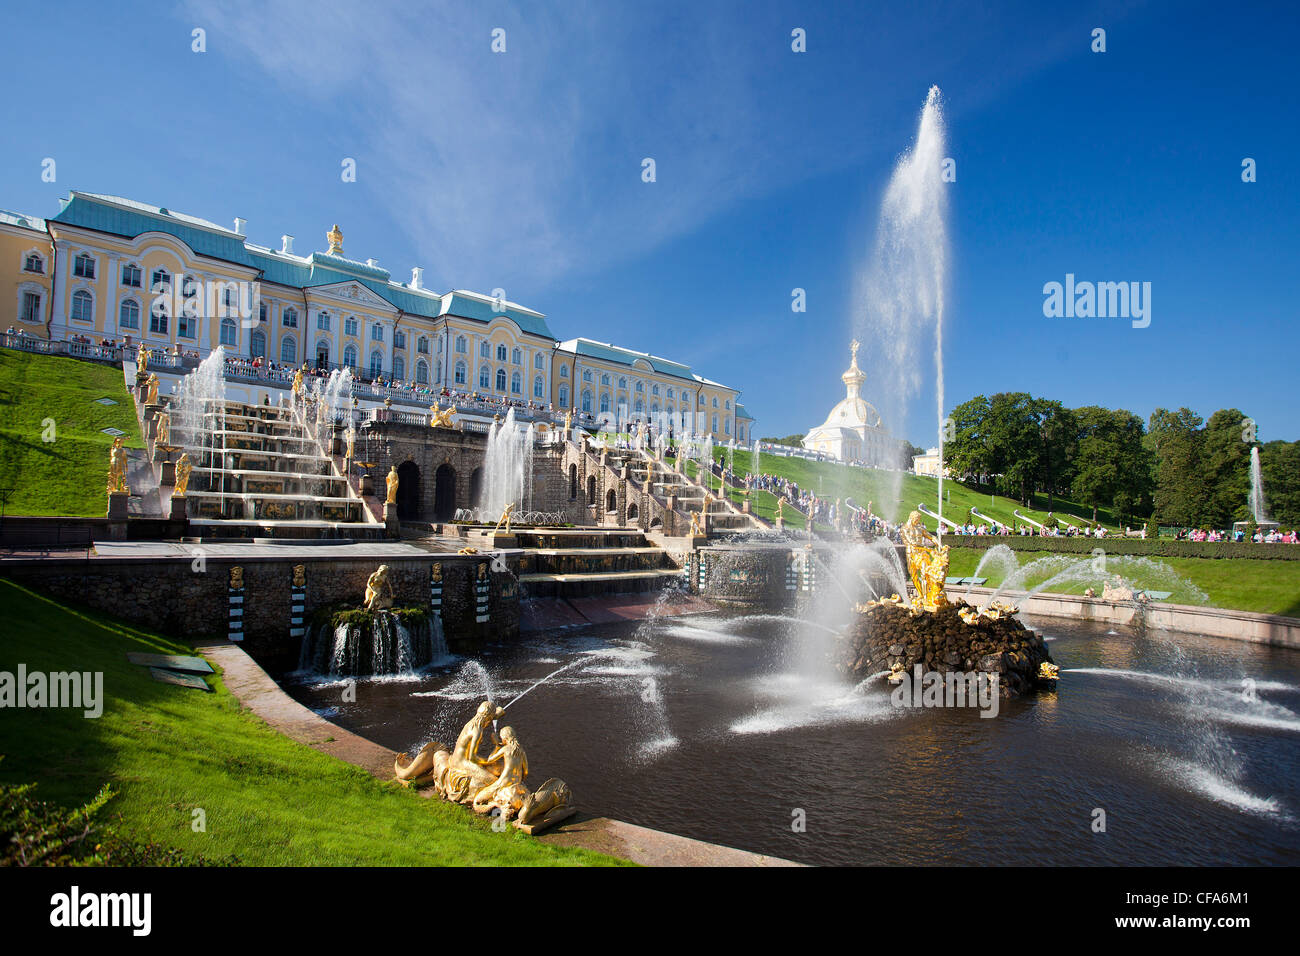 Russia, Europa, San Pietroburgo, Peterburg, città di Peterhof Palace, il Summer Palace, patrimonio mondiale, parco, fontana, stagno, statua Foto Stock